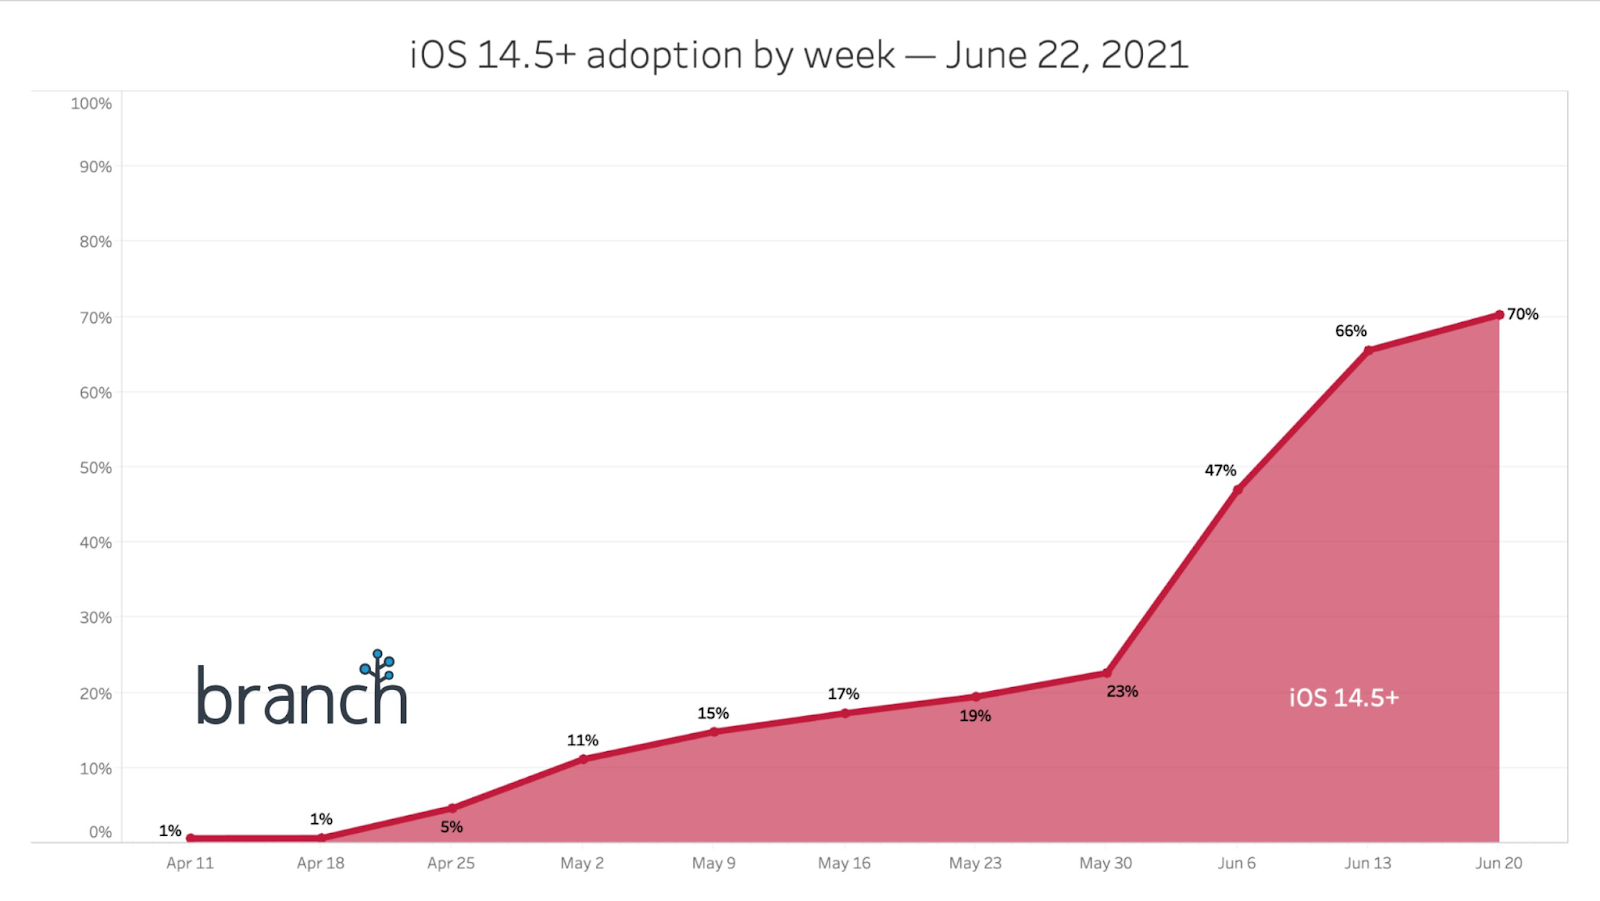 post-idfa iOS 14.5+ adoption by week